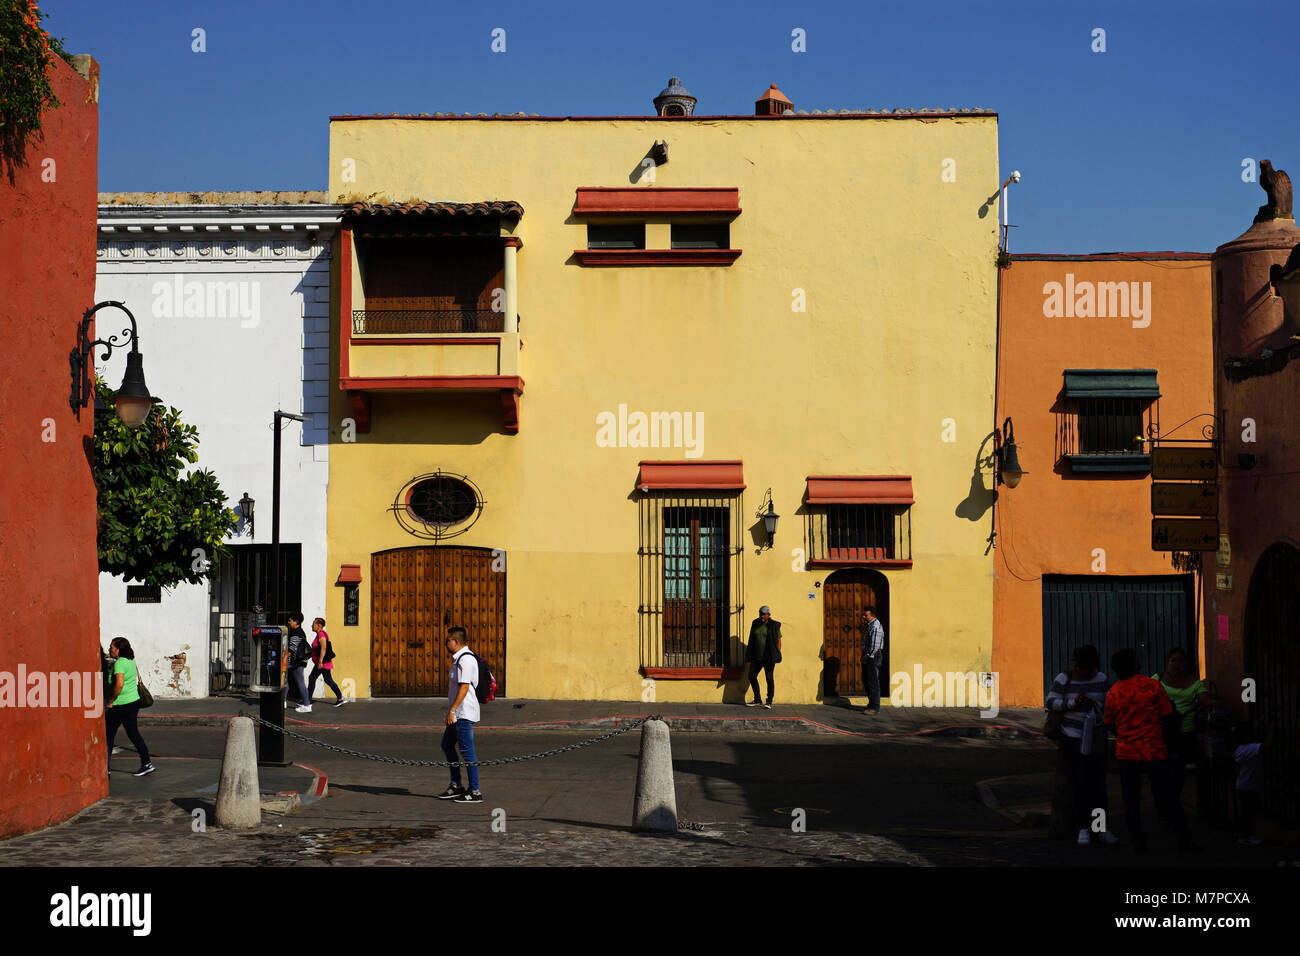 Street in Cuernavaca, Mexico. Stock Photo